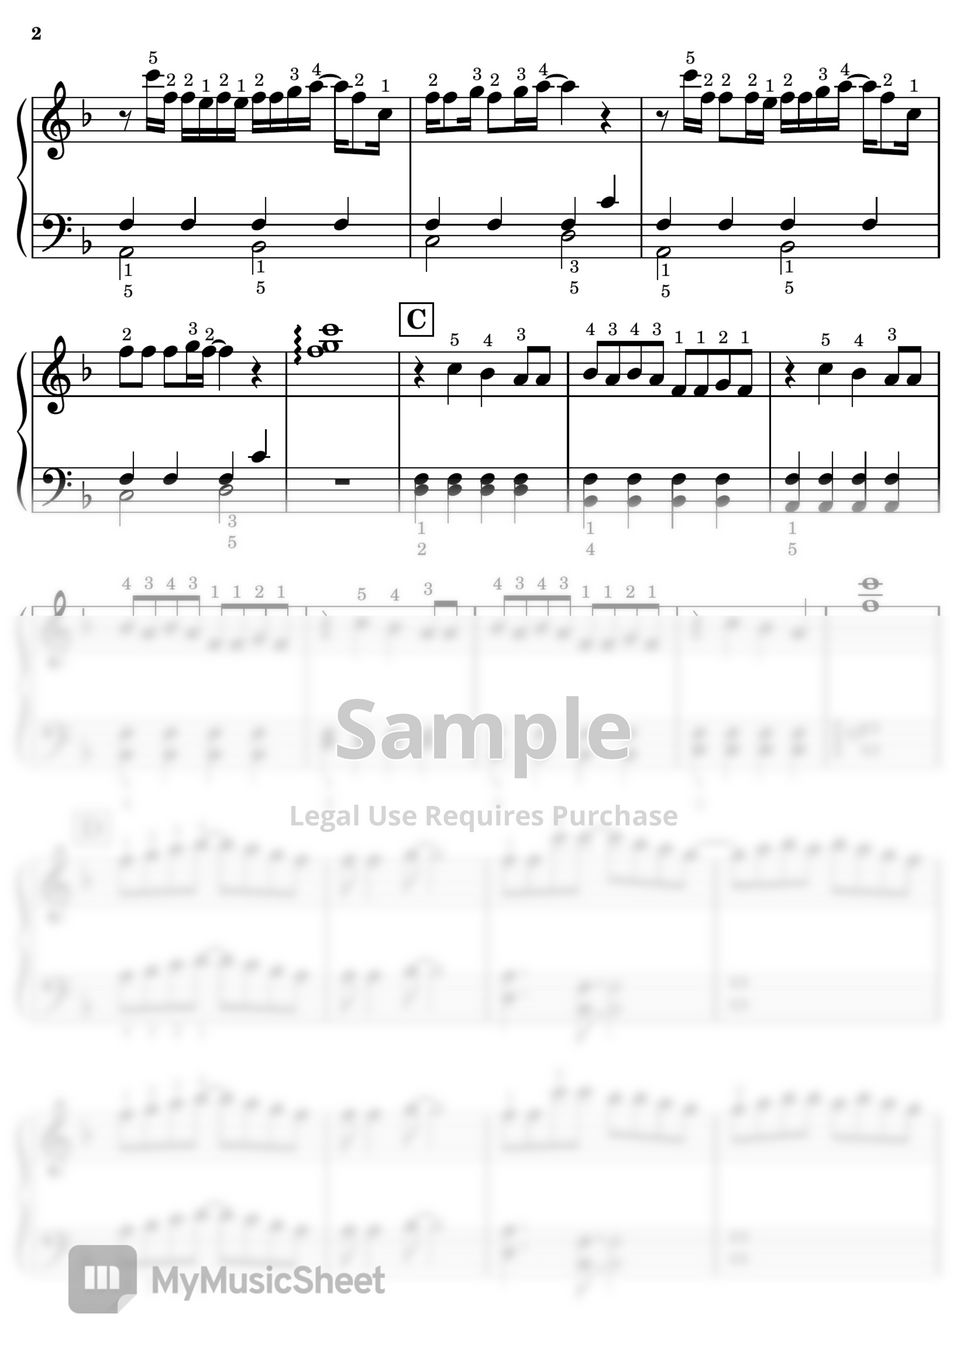 RAPWIMPS - 【Easy】Grand Escape from movie "Weathering with You" ("Weathering with You") by Piano teacher's Score